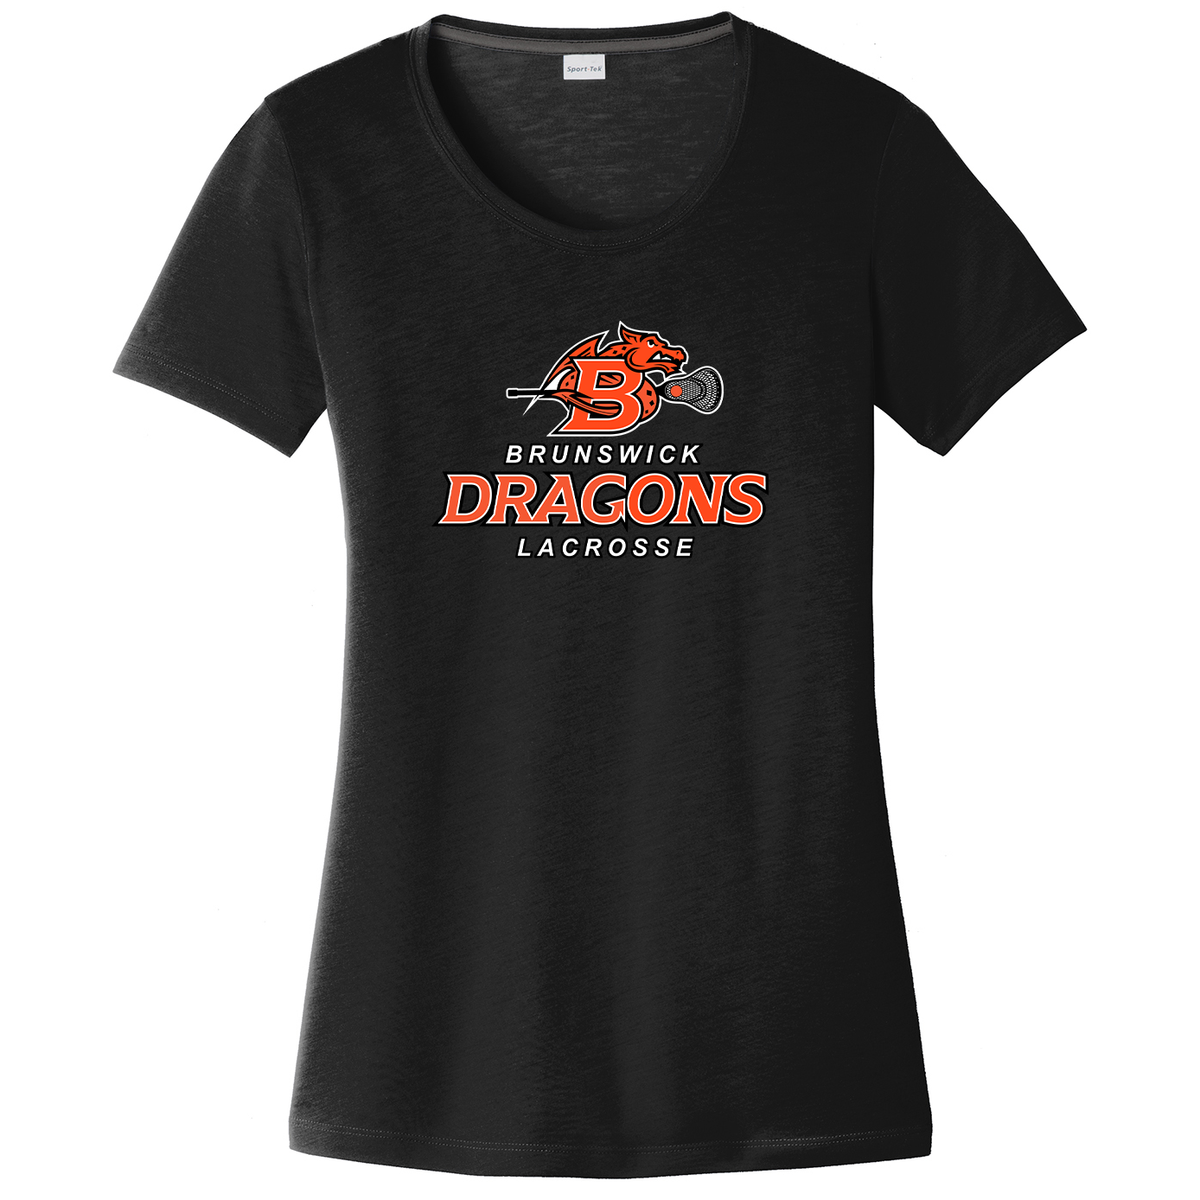 Brunswick Dragons Lacrosse Women's CottonTouch Performance T-Shirt